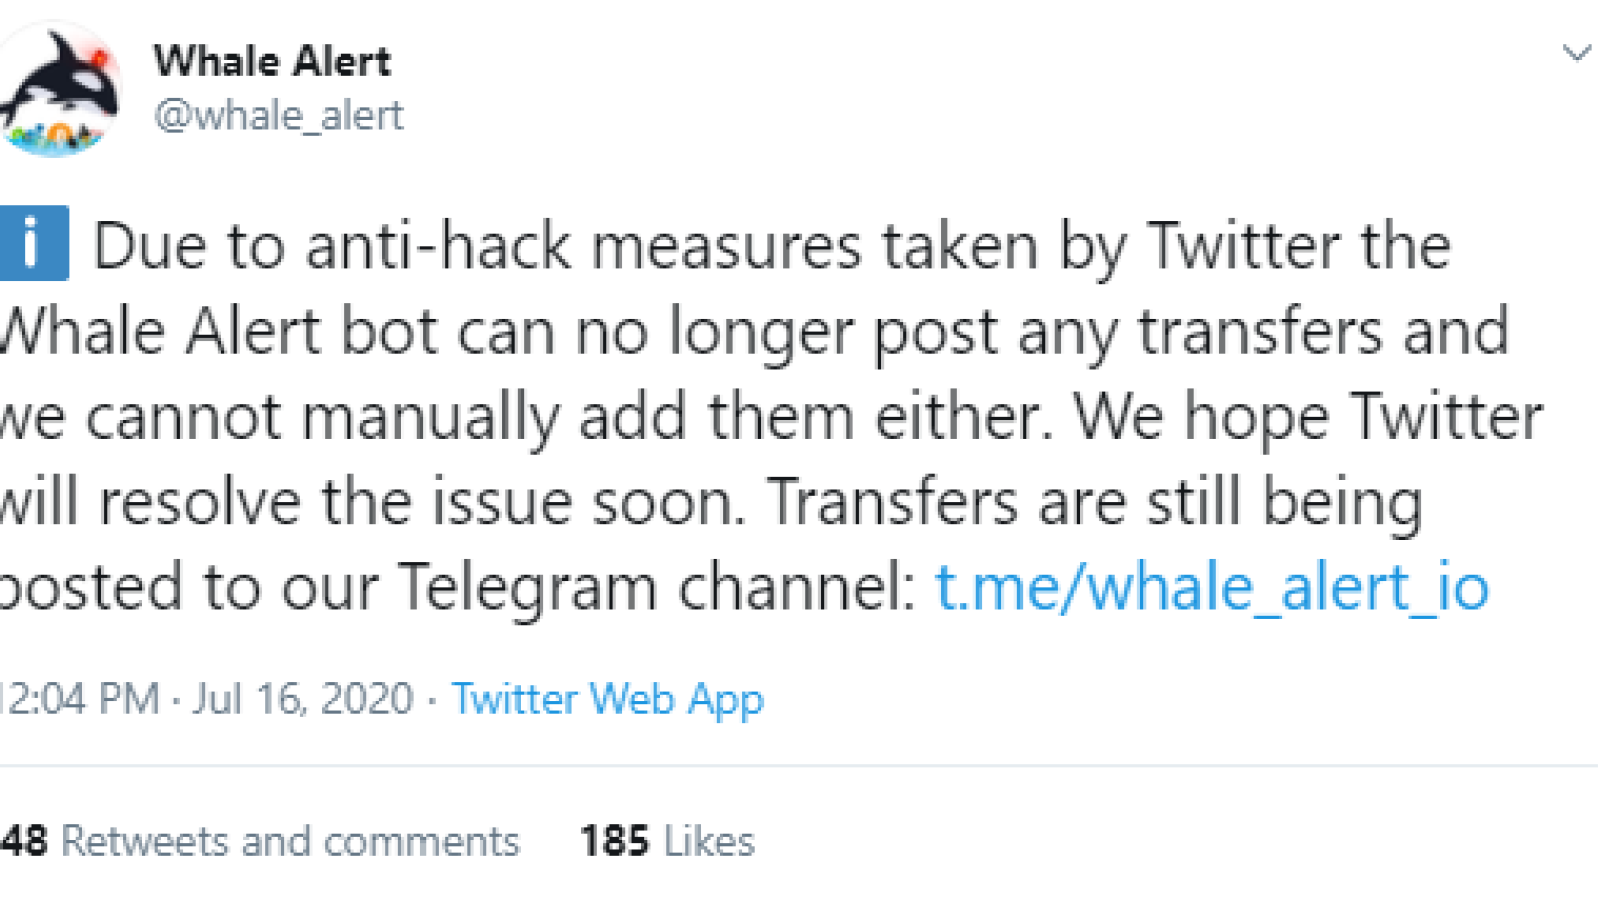 Whale Alert